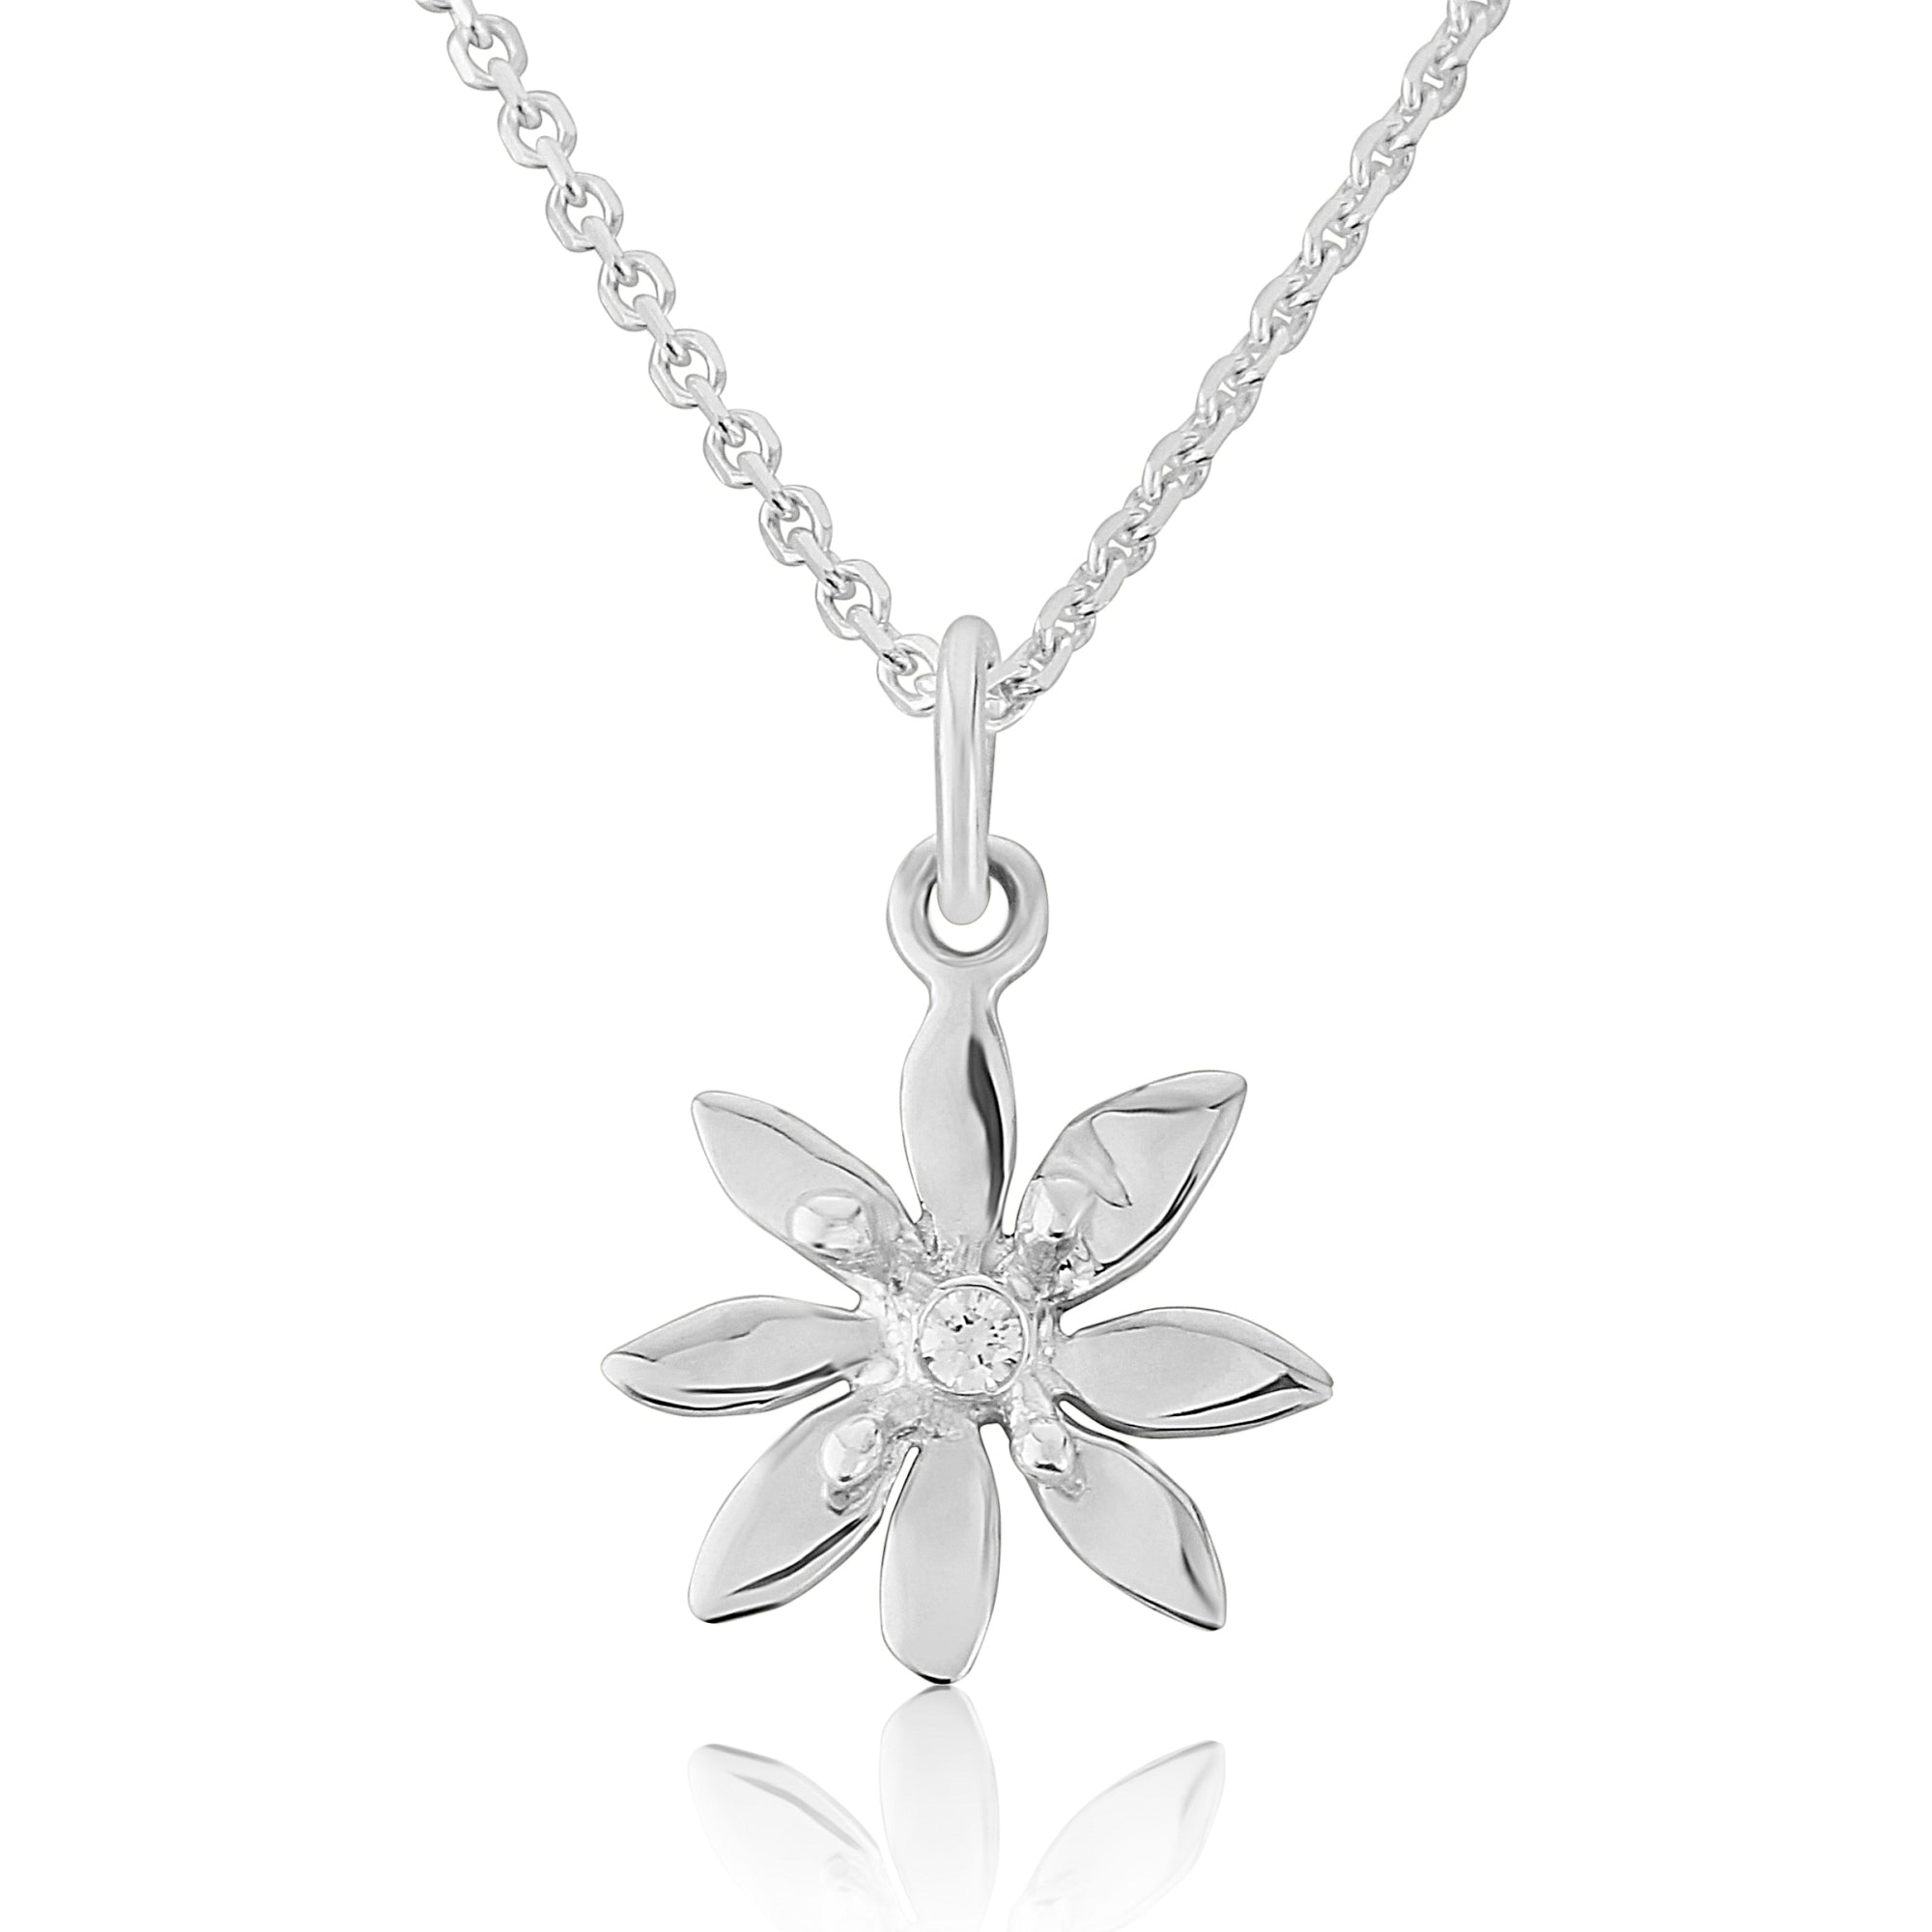 Allium Silver small Necklace | Glenna Jewellery Scotland